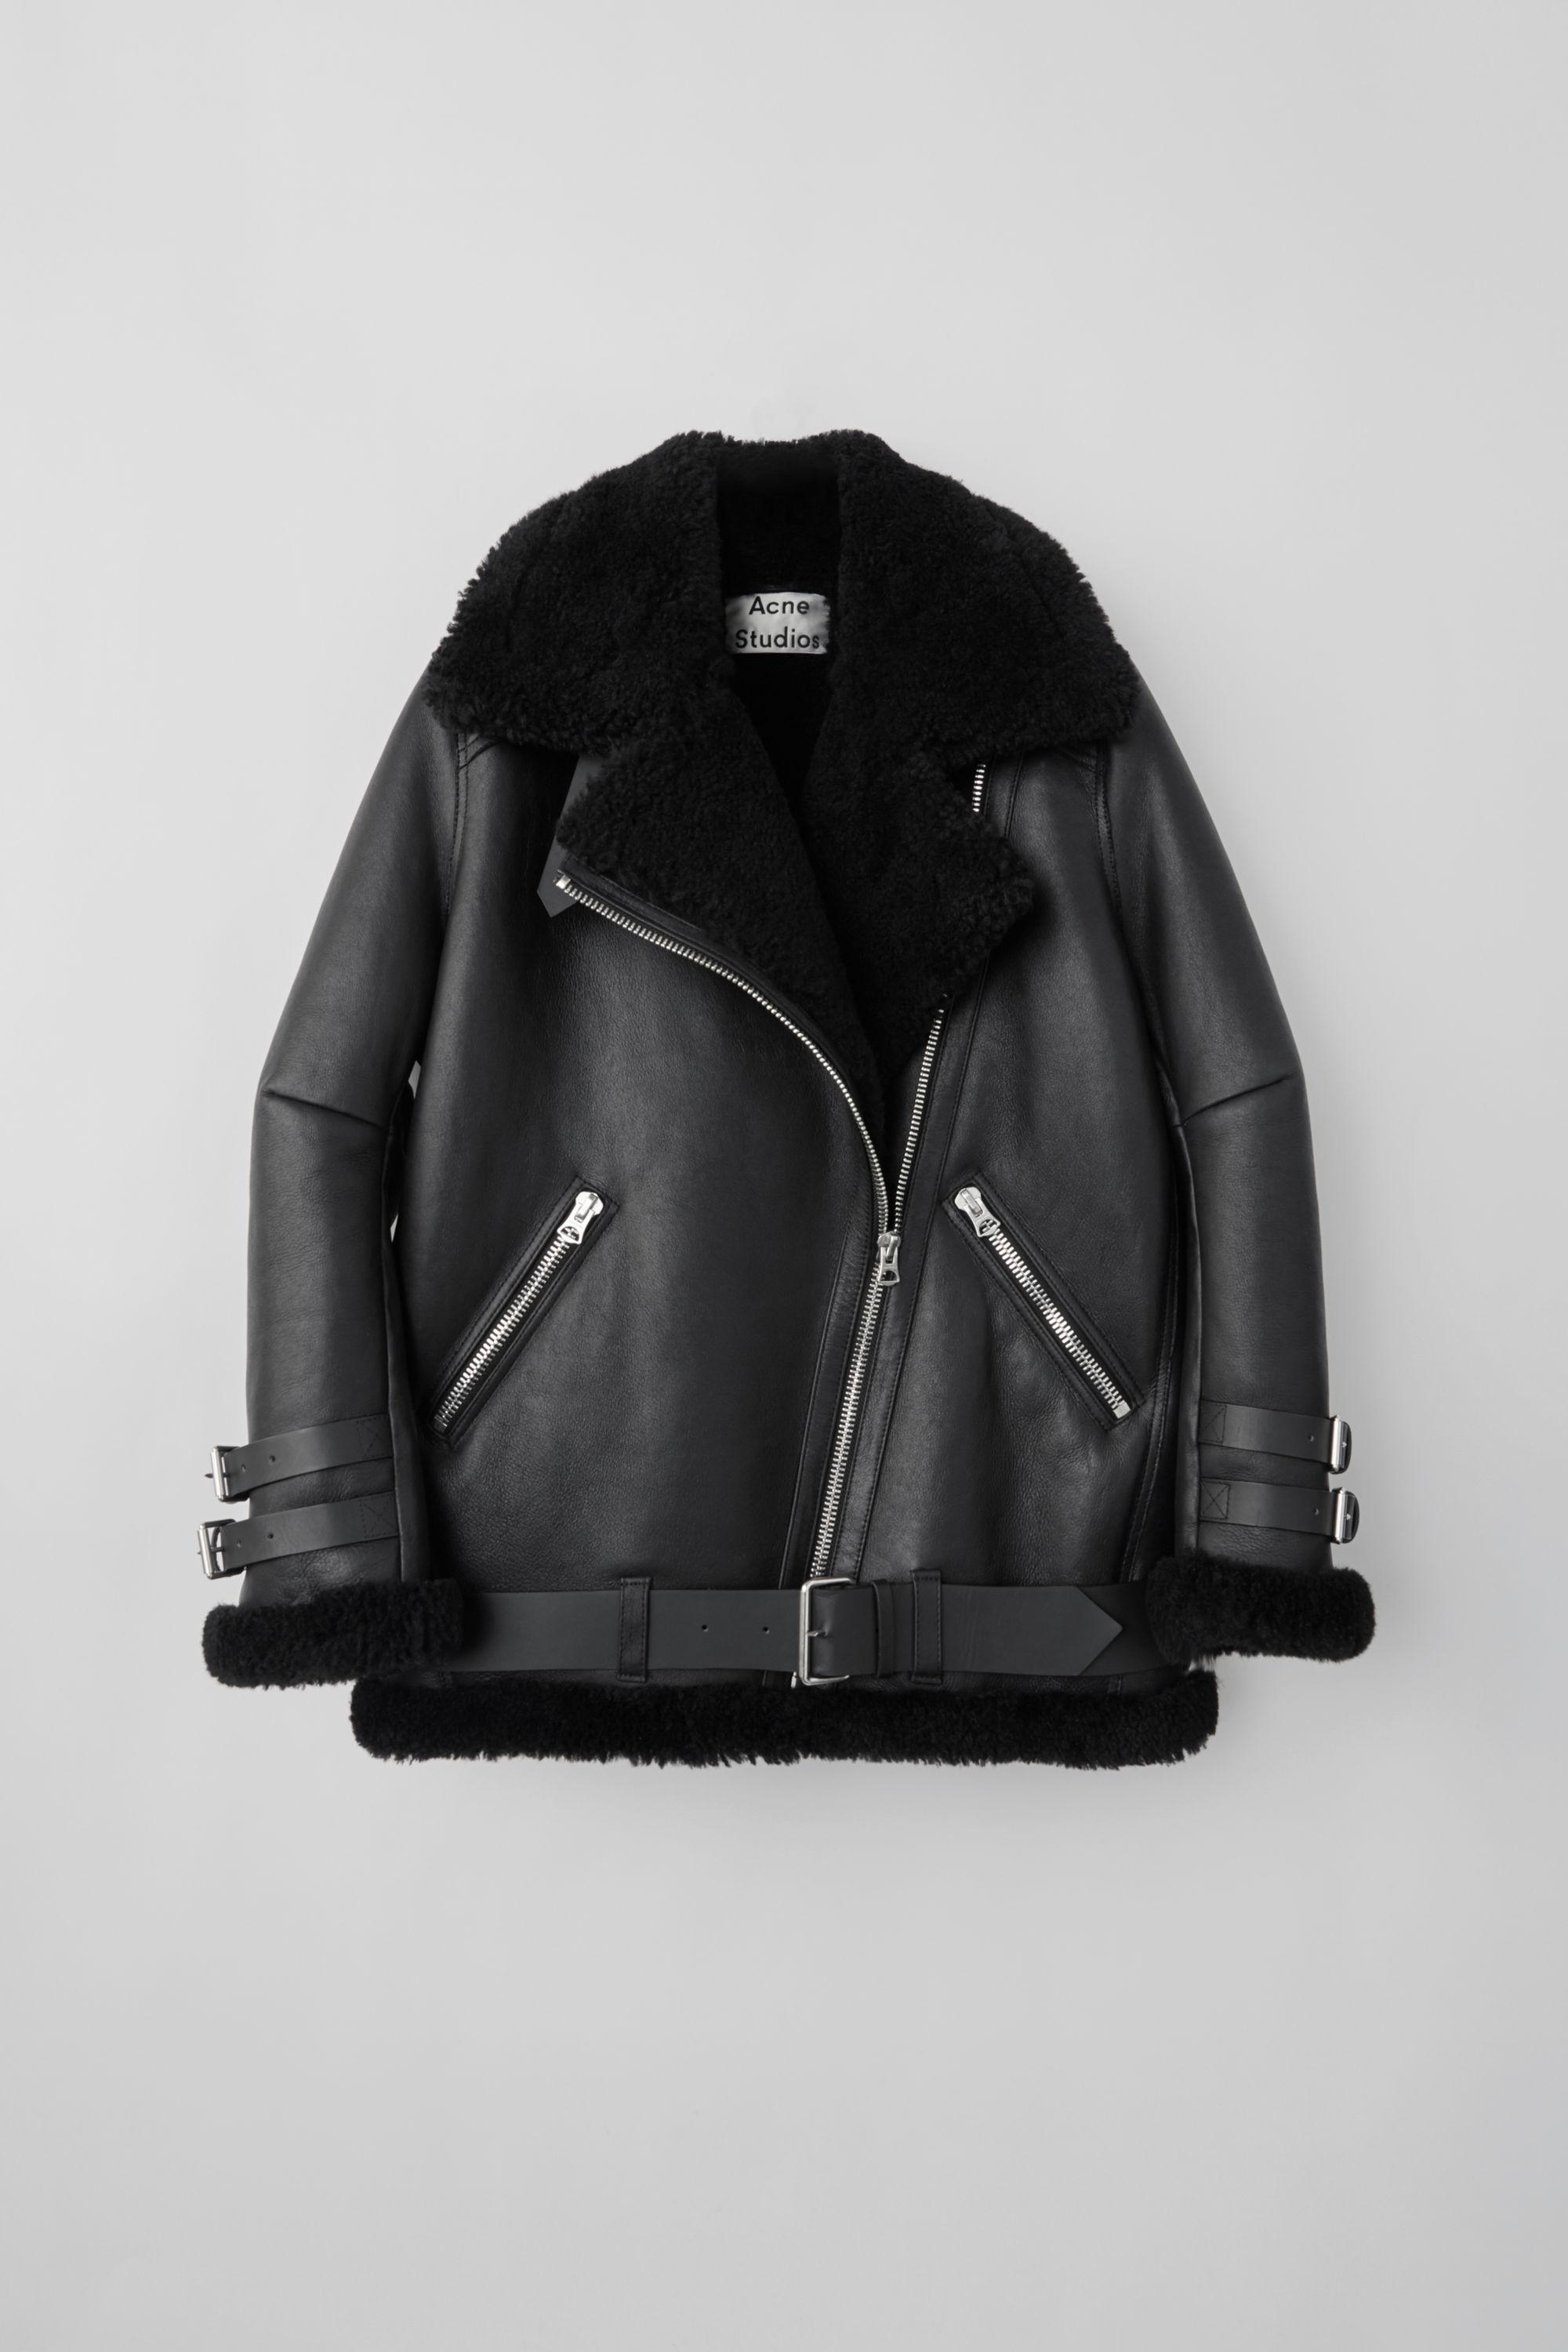 Acne Studios Leather Velocite Black / Black Shearling Aviator Jacket - Lyst